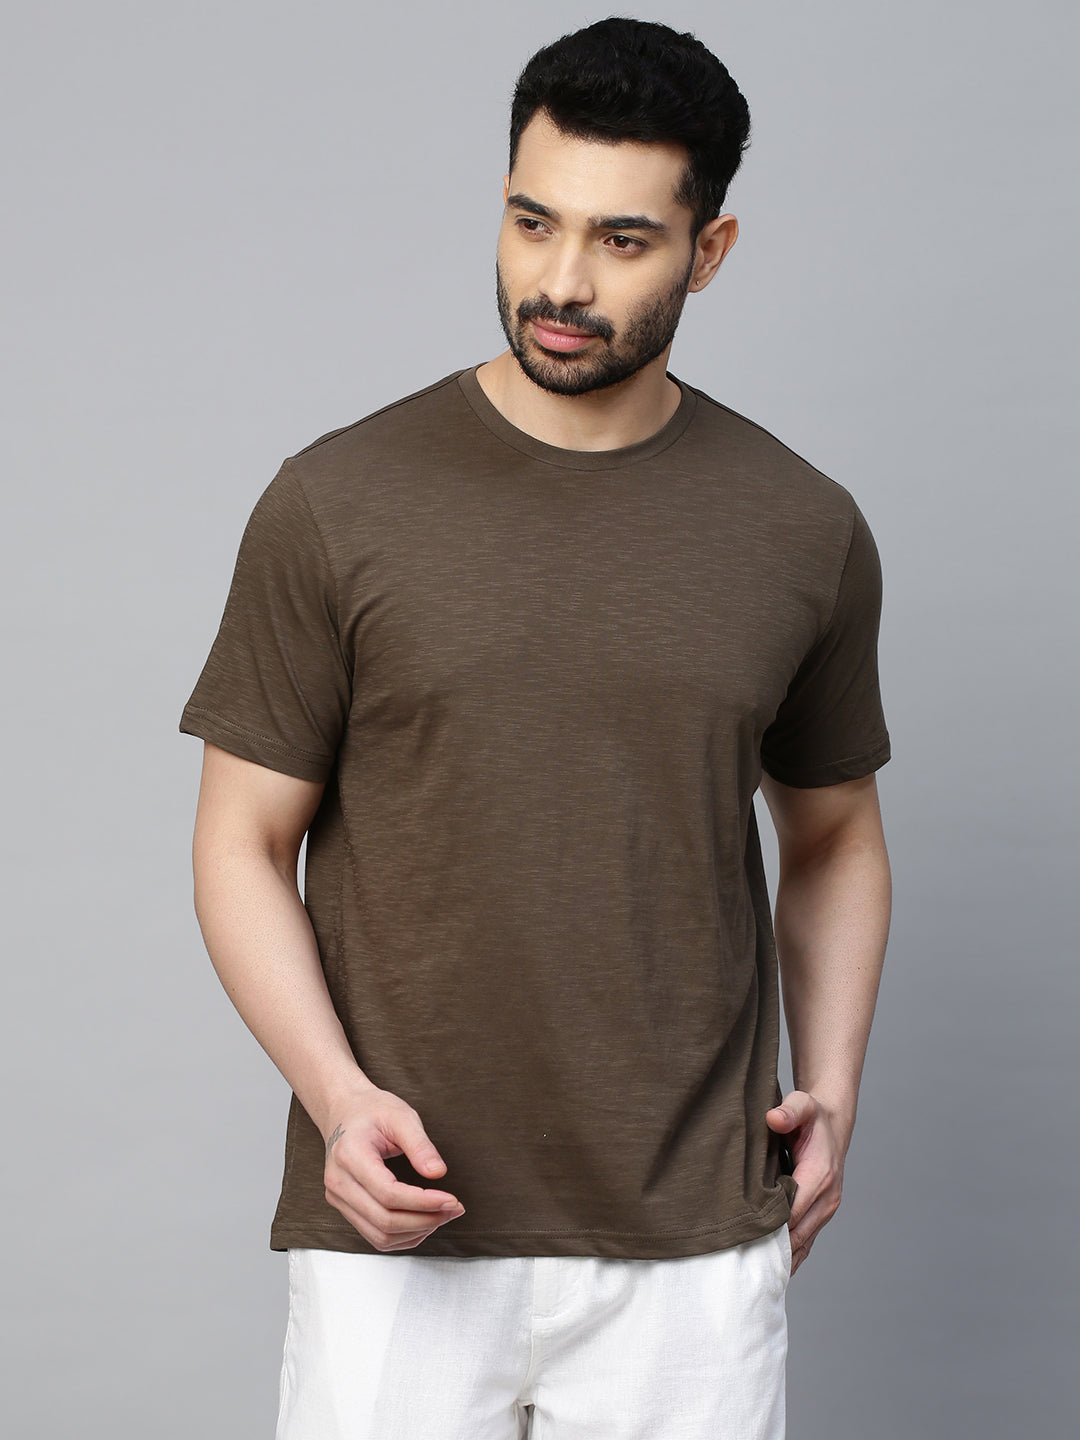 Buy Men's Cotton Casual Wear Regular Fit Tshirt|Cottonworld